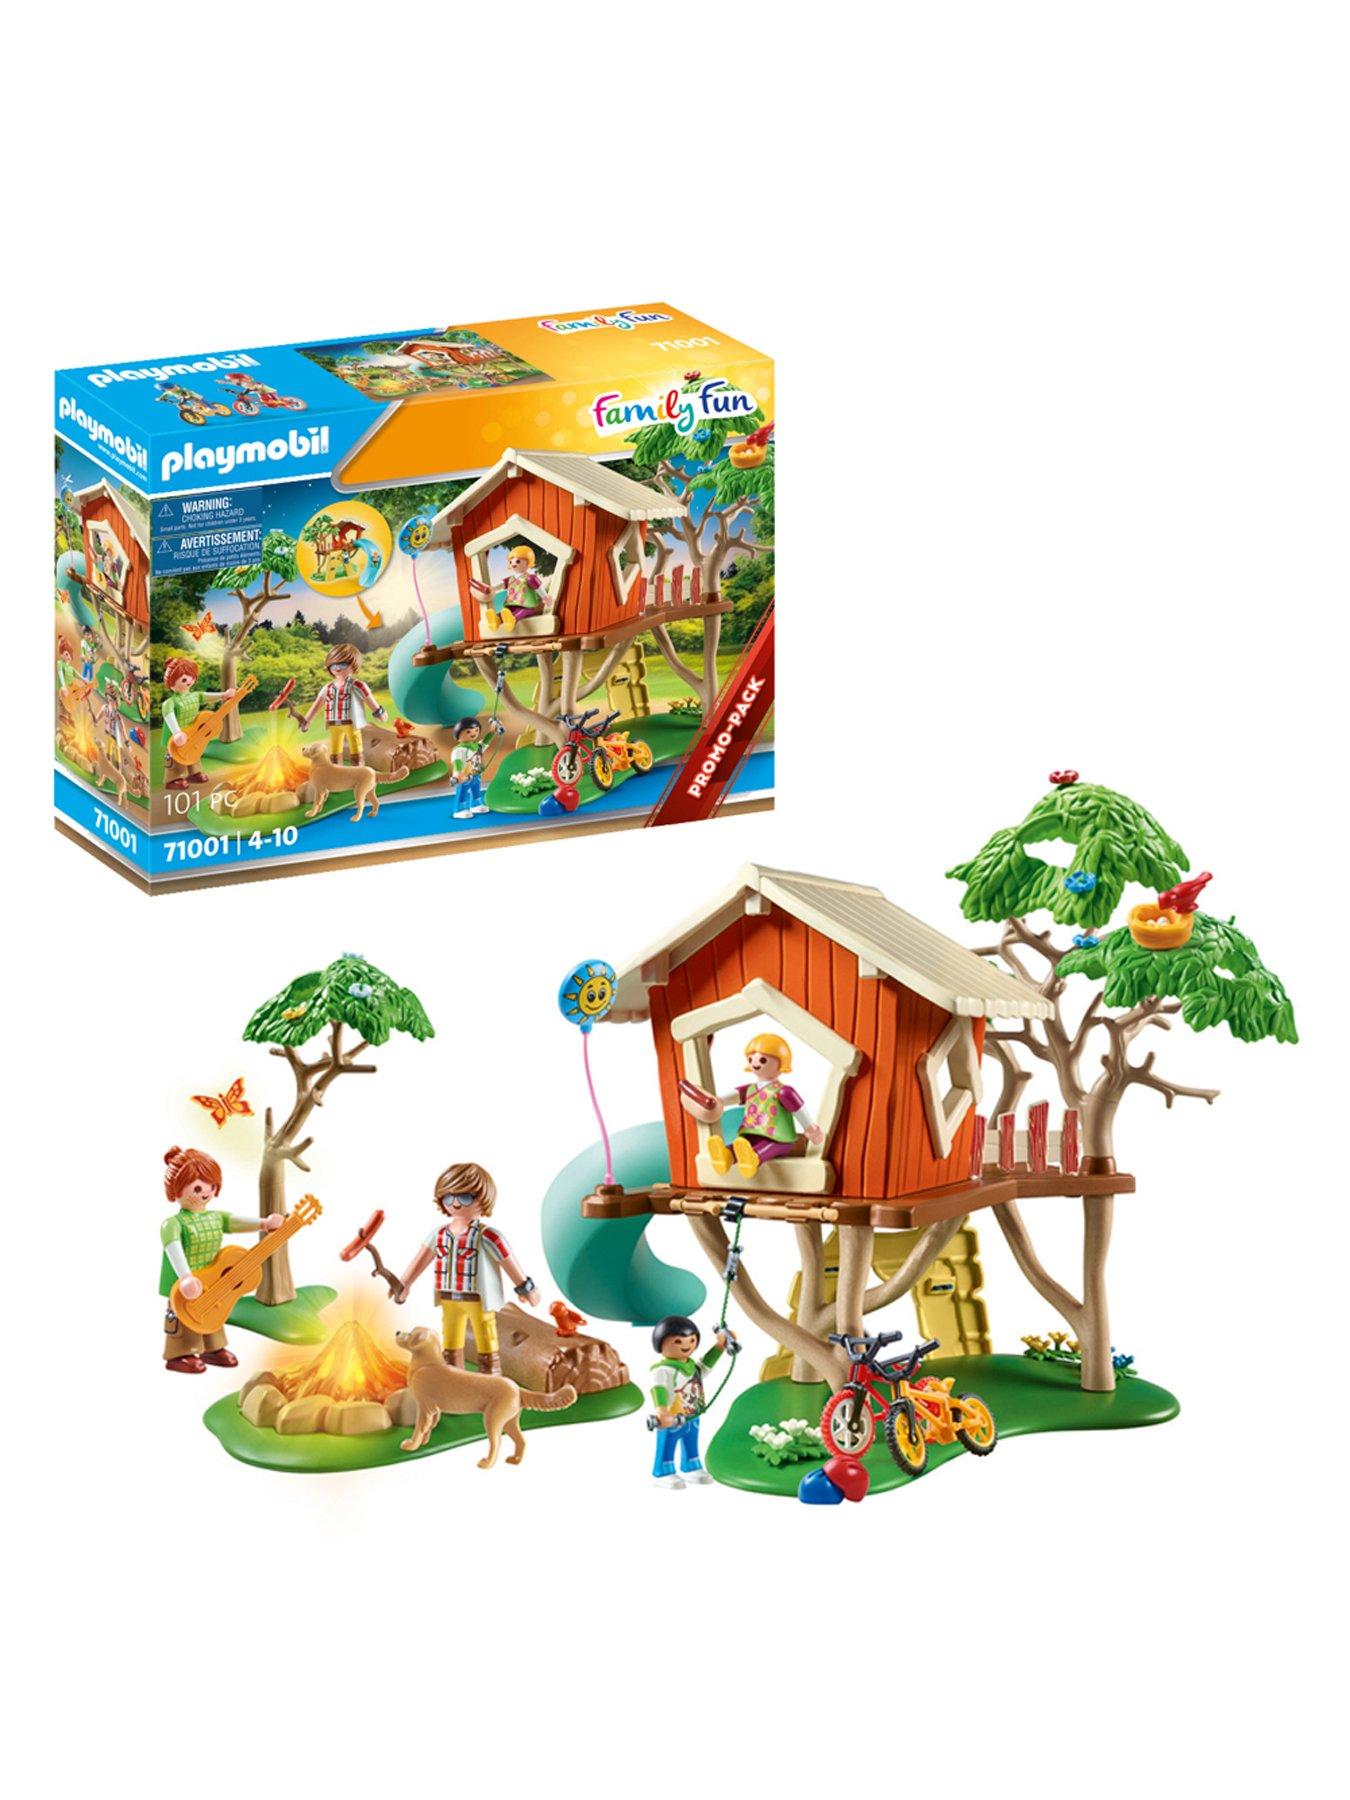 Wiltopia Anteater Care – Treehouse Toys